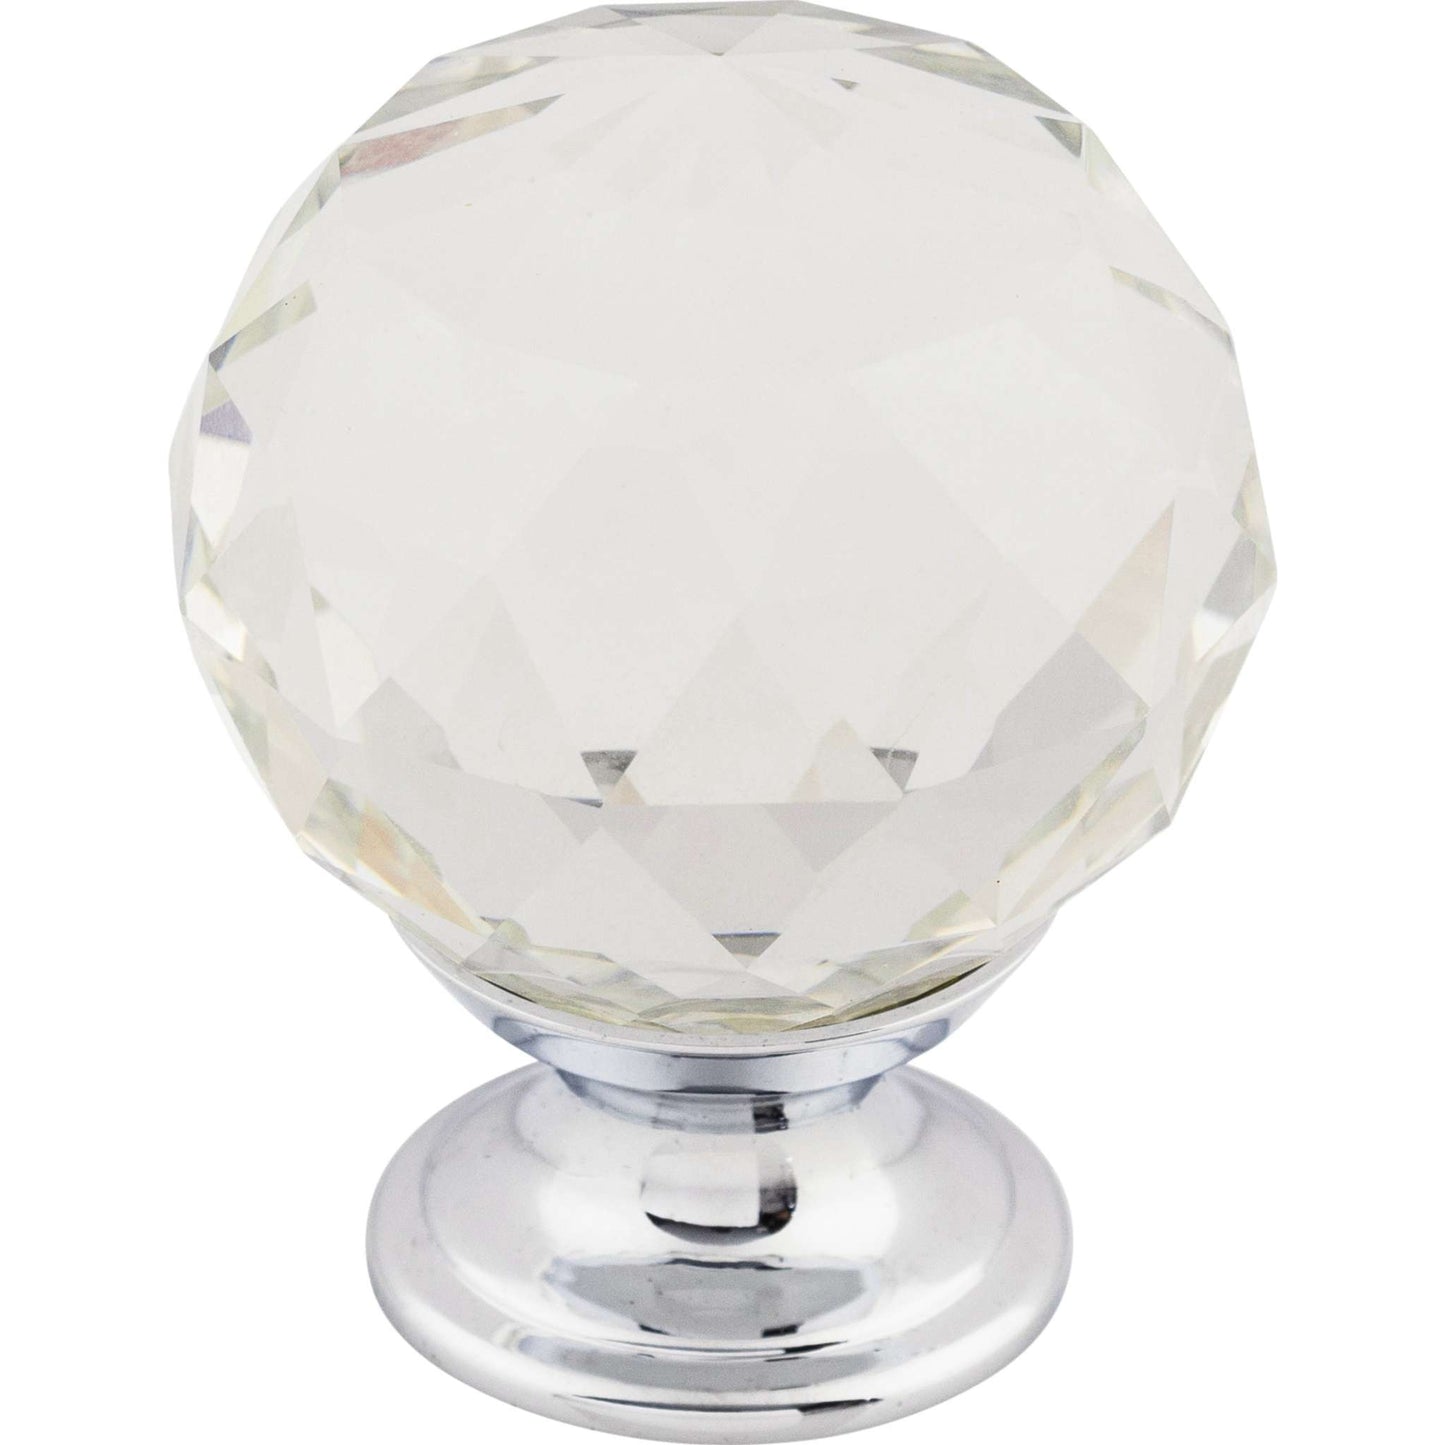 Top Knobs - Clear Crystal Knob